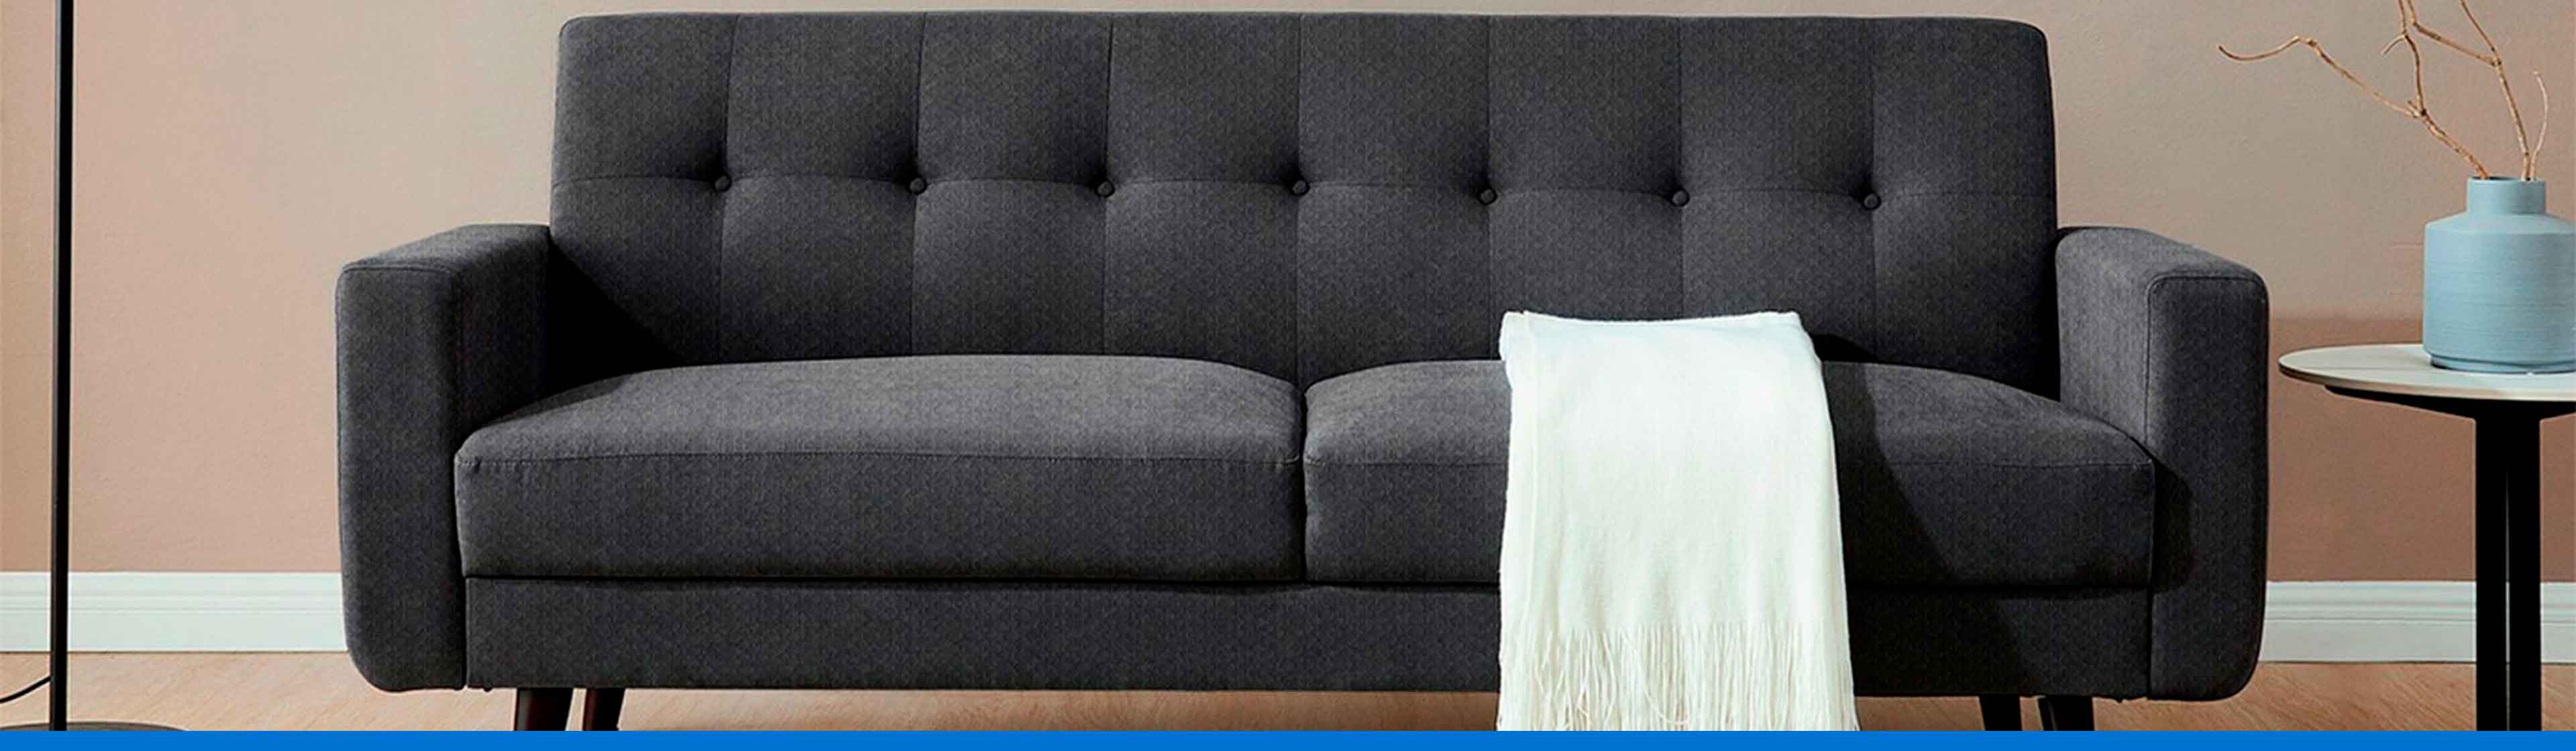 sofa anti rasguños